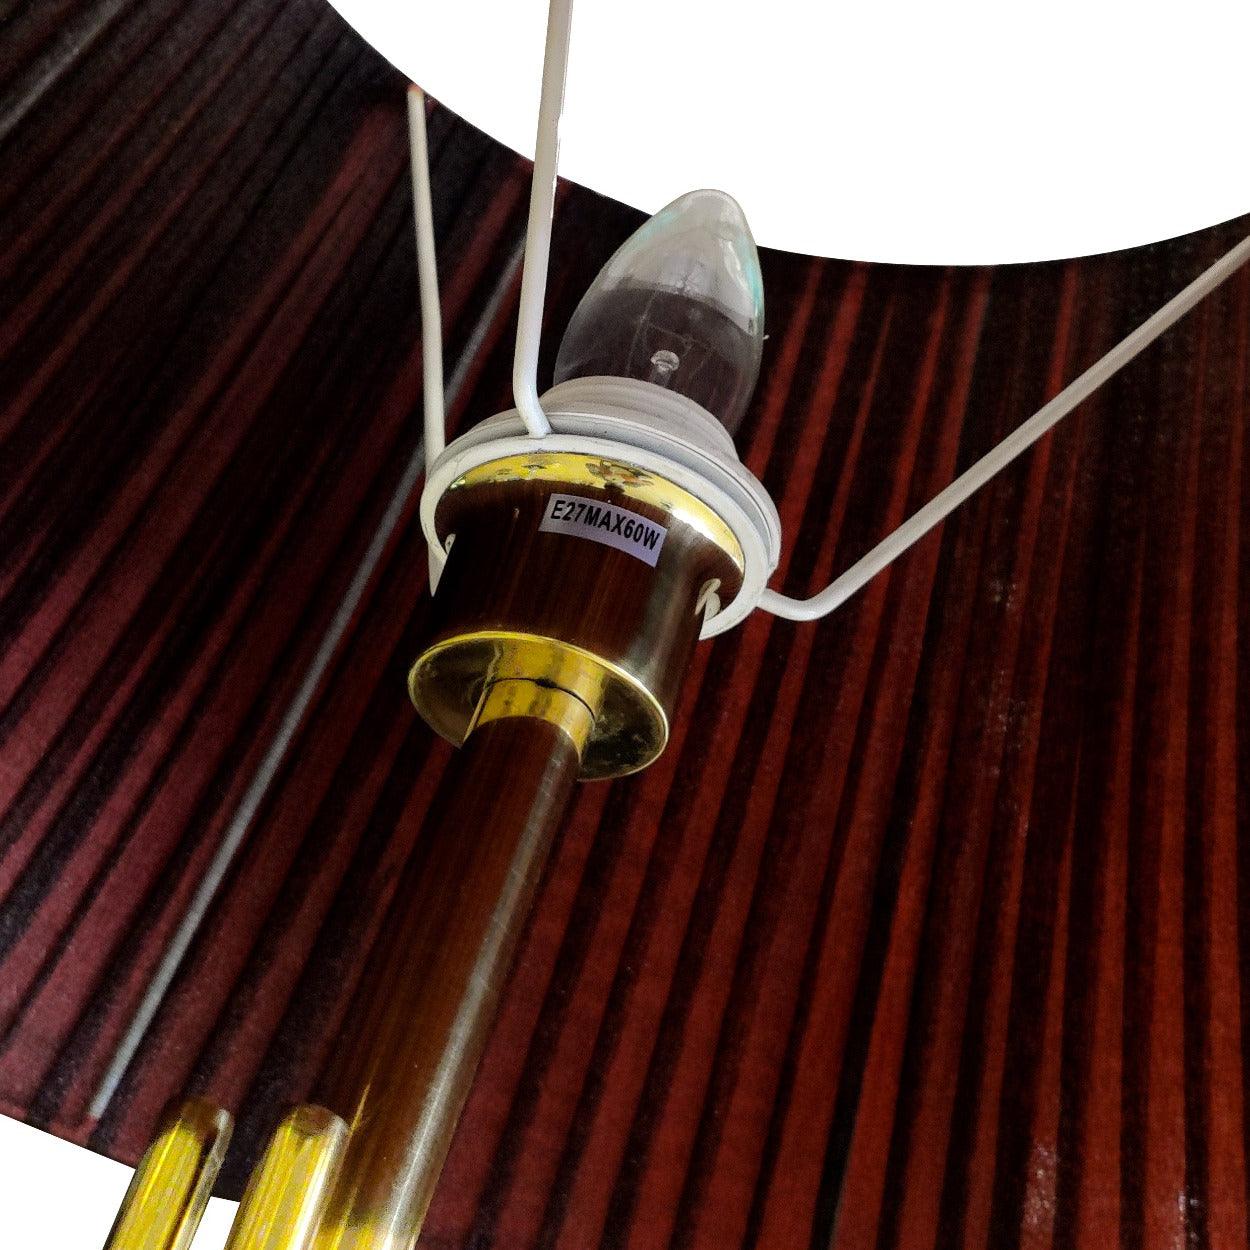 ANKUR ORGAN CONTEMPORARY FLOOR LAMP GOLD FINISH - Ankur Lighting